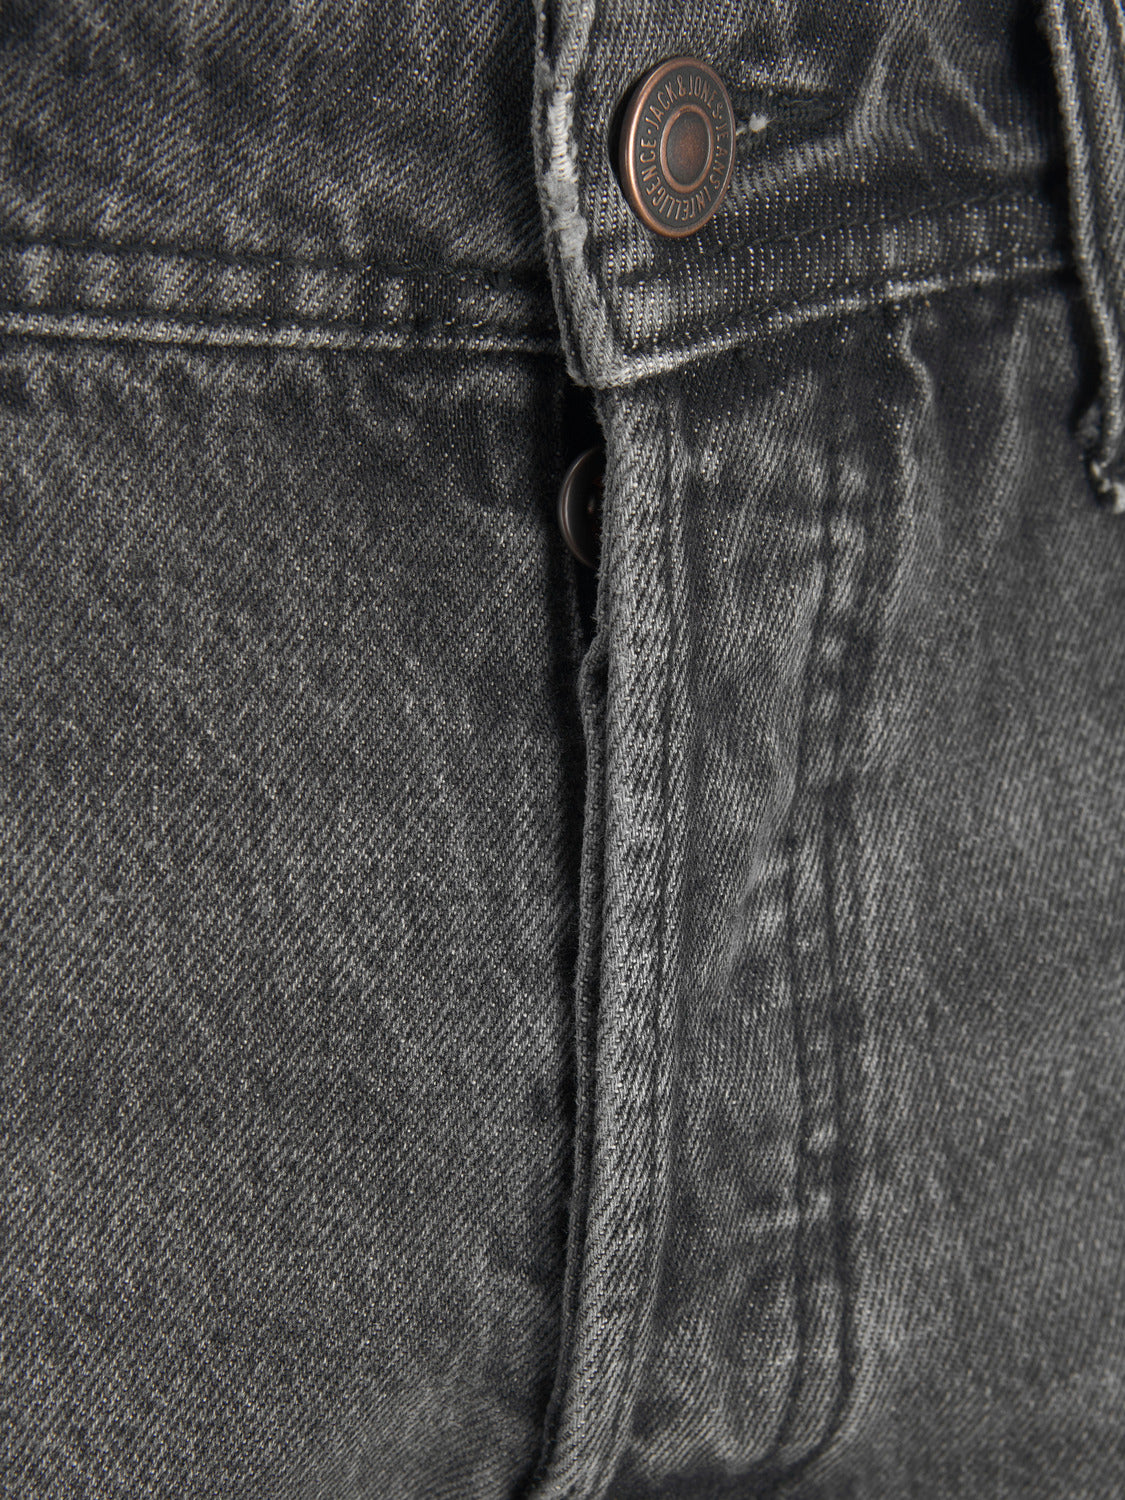 JJIMIKE Jeans - Grey Denim